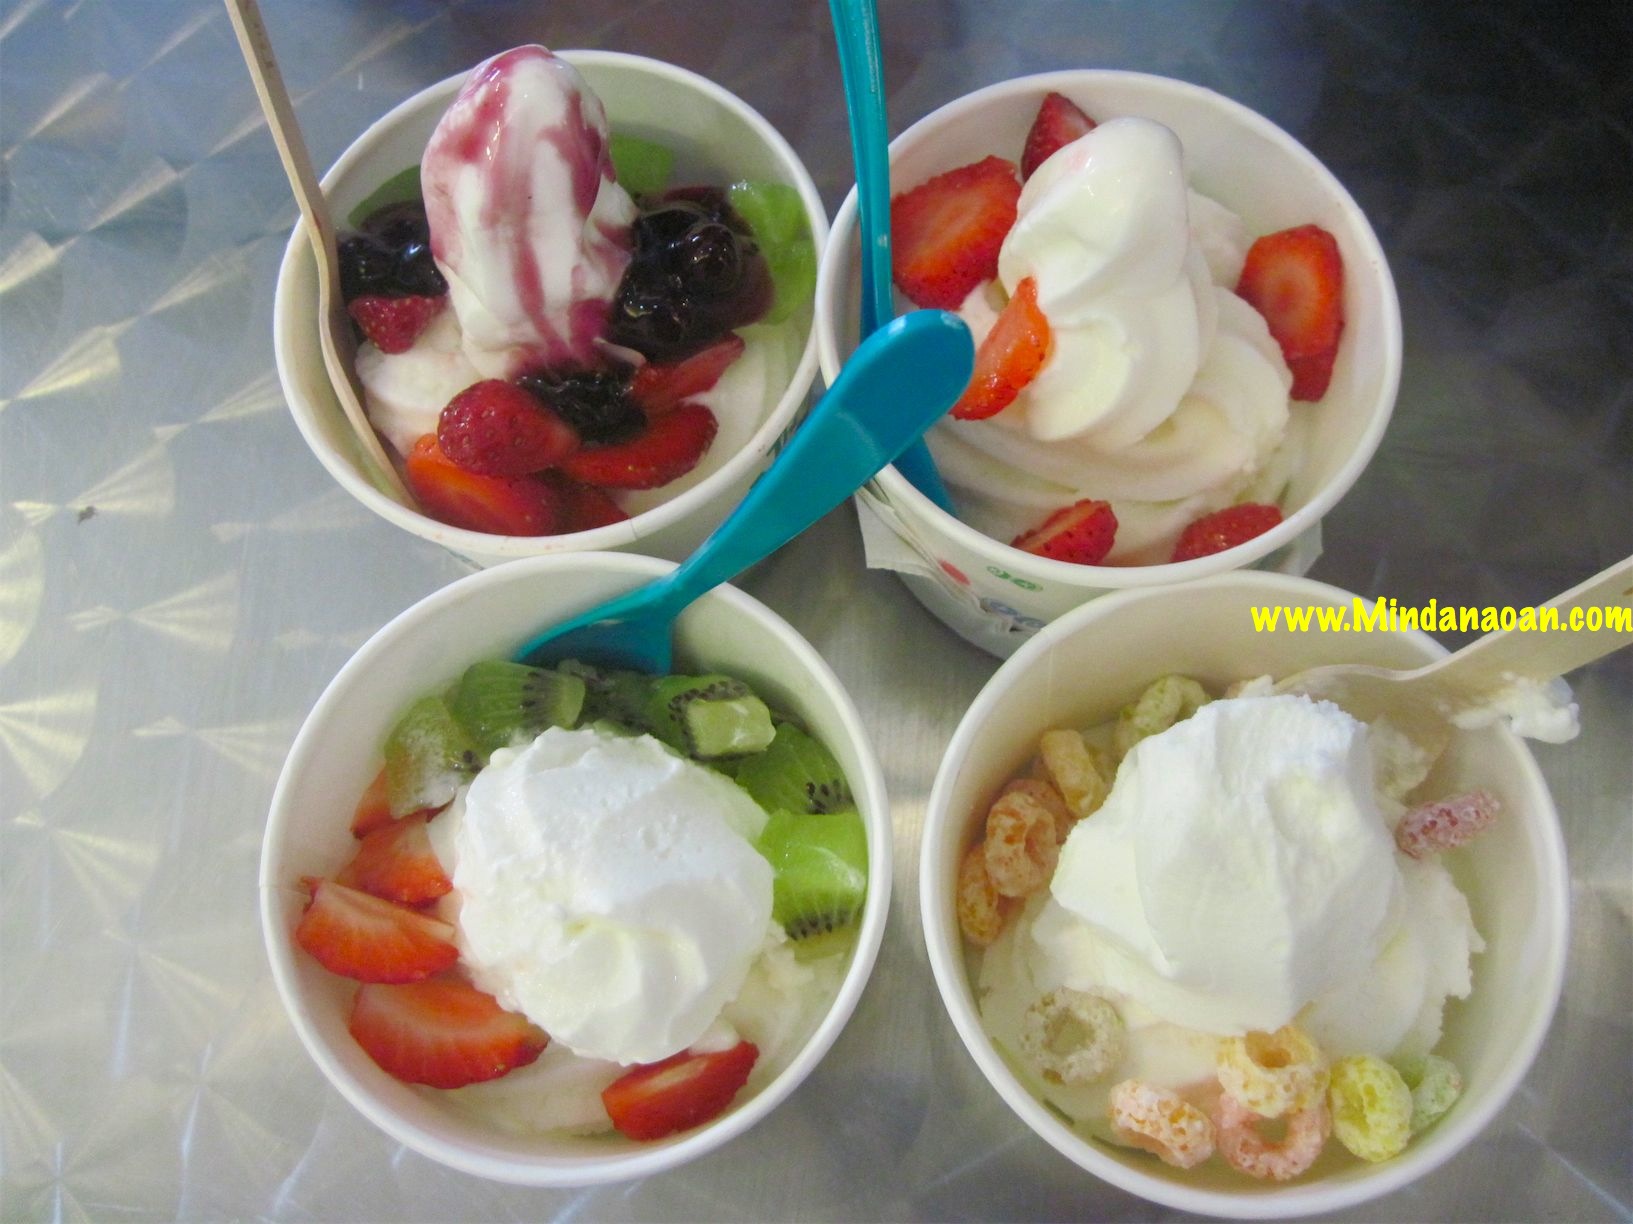 The White Hat Yogurt Opens Centrio Mall CdeO Branch